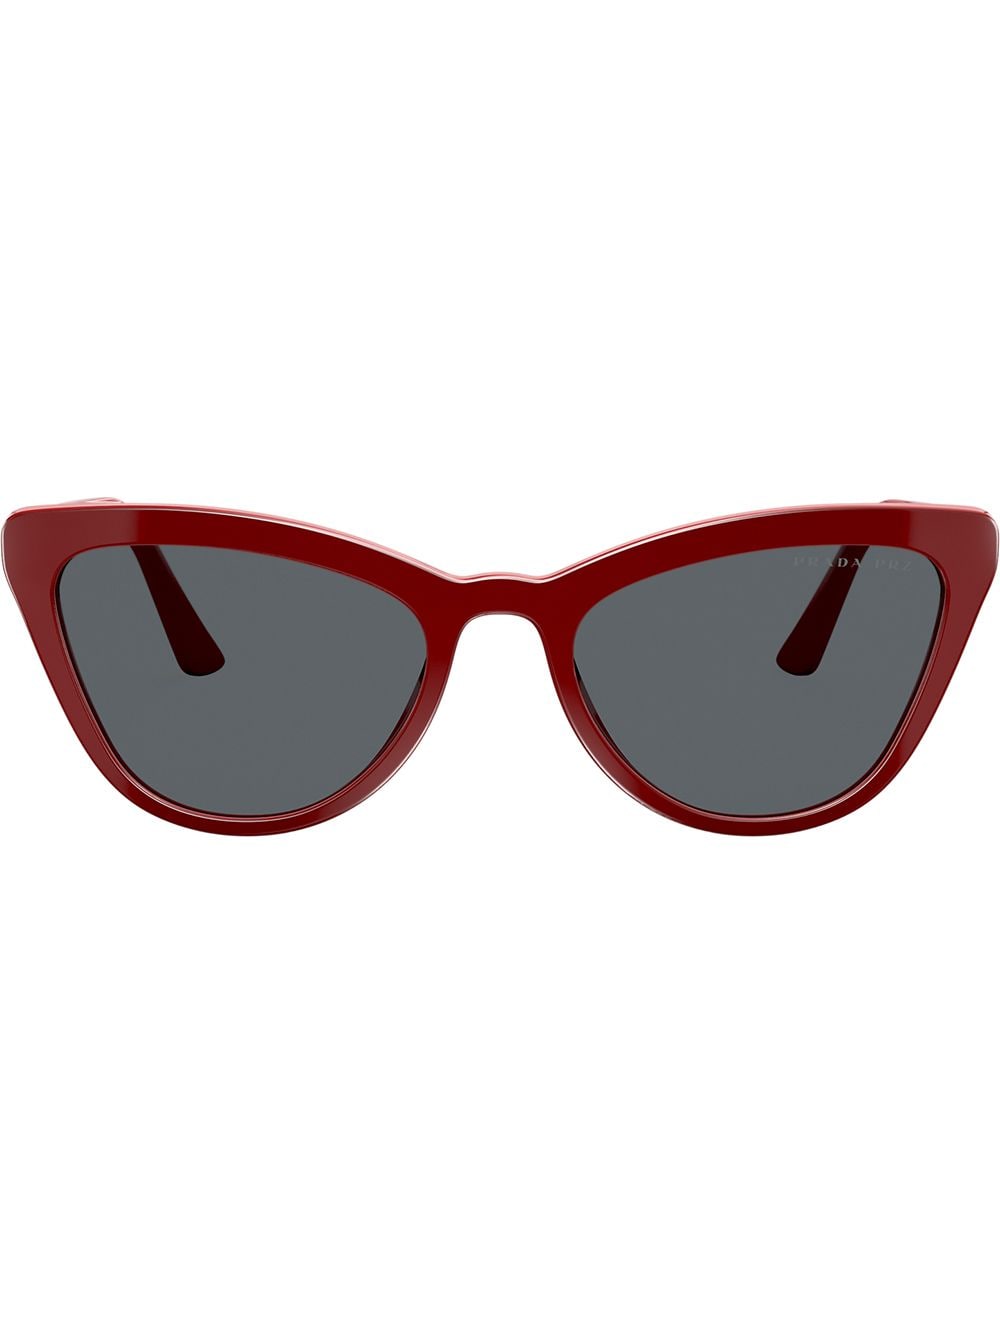 prada red sunglasses